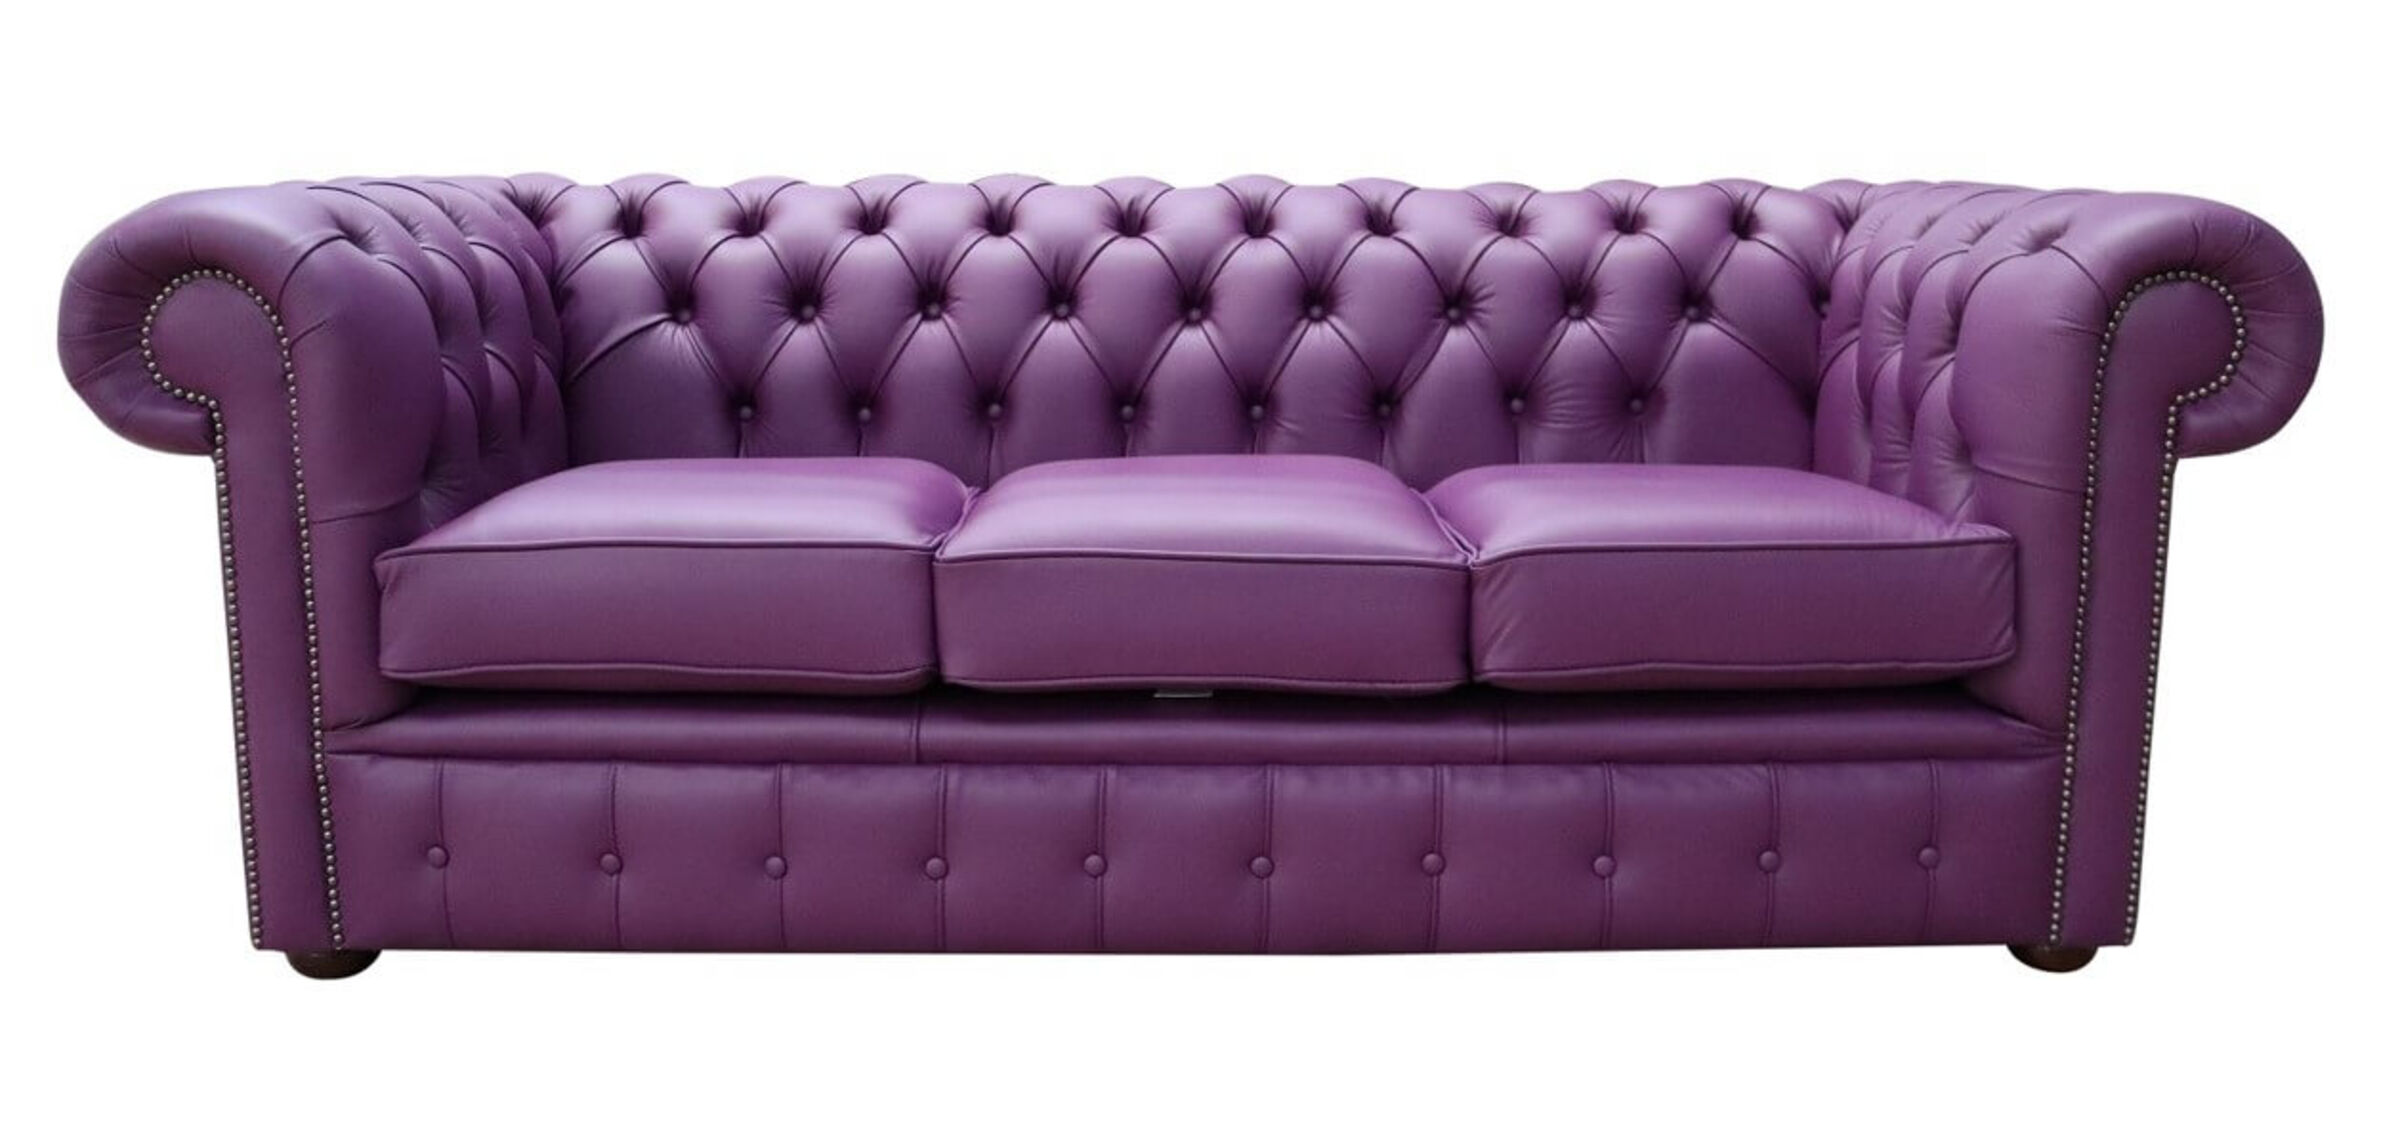 Chesterfield Purple Leather 3 Seater, Purple Leather Sofa